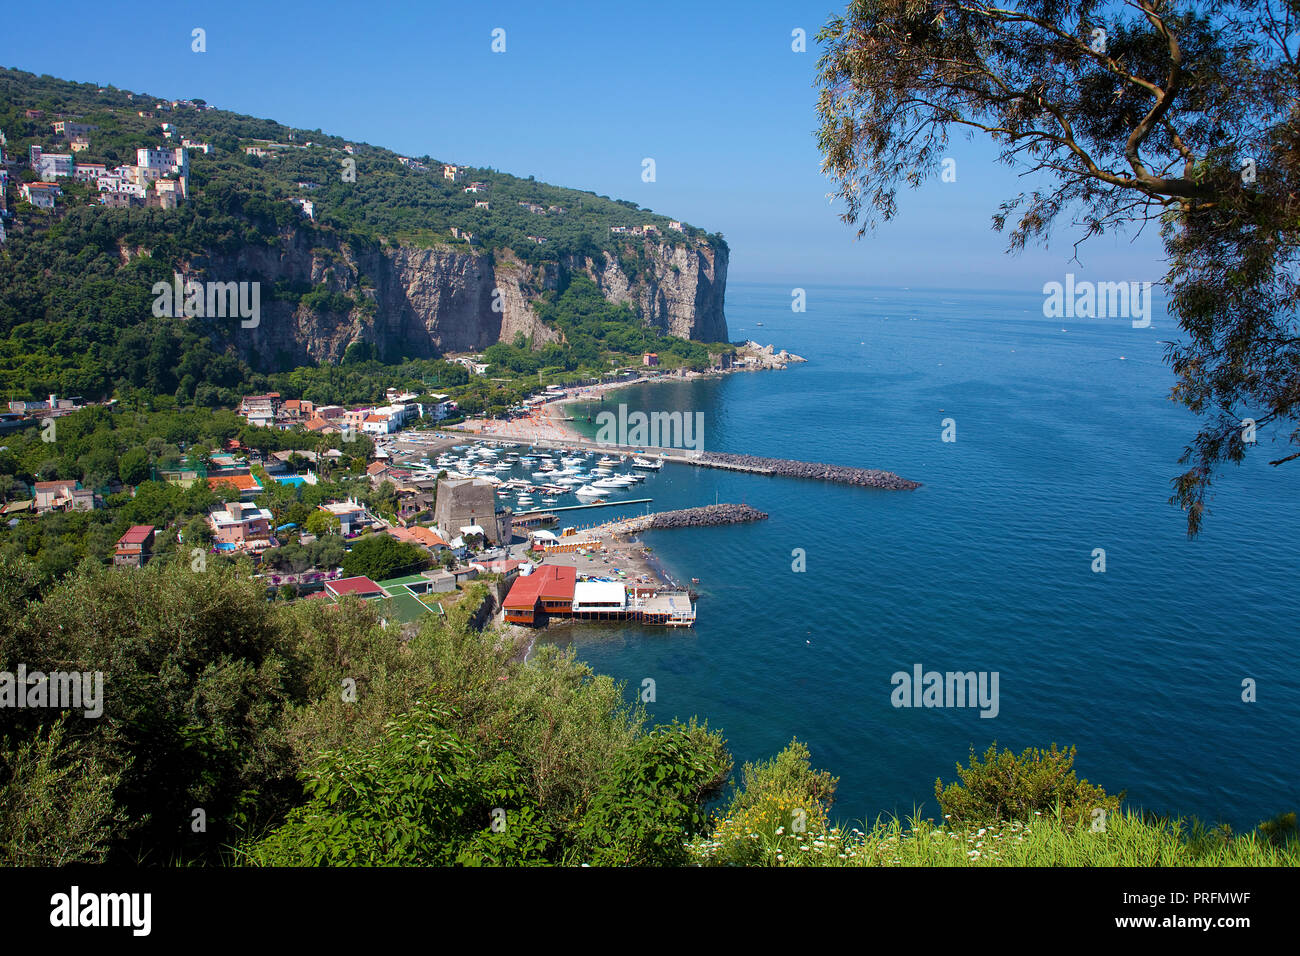 Fishing village and harbour of Seiano, close Sorrento, Peninsula of Sorrento, Gulf of Naples, Campania, Italy Stock Photo